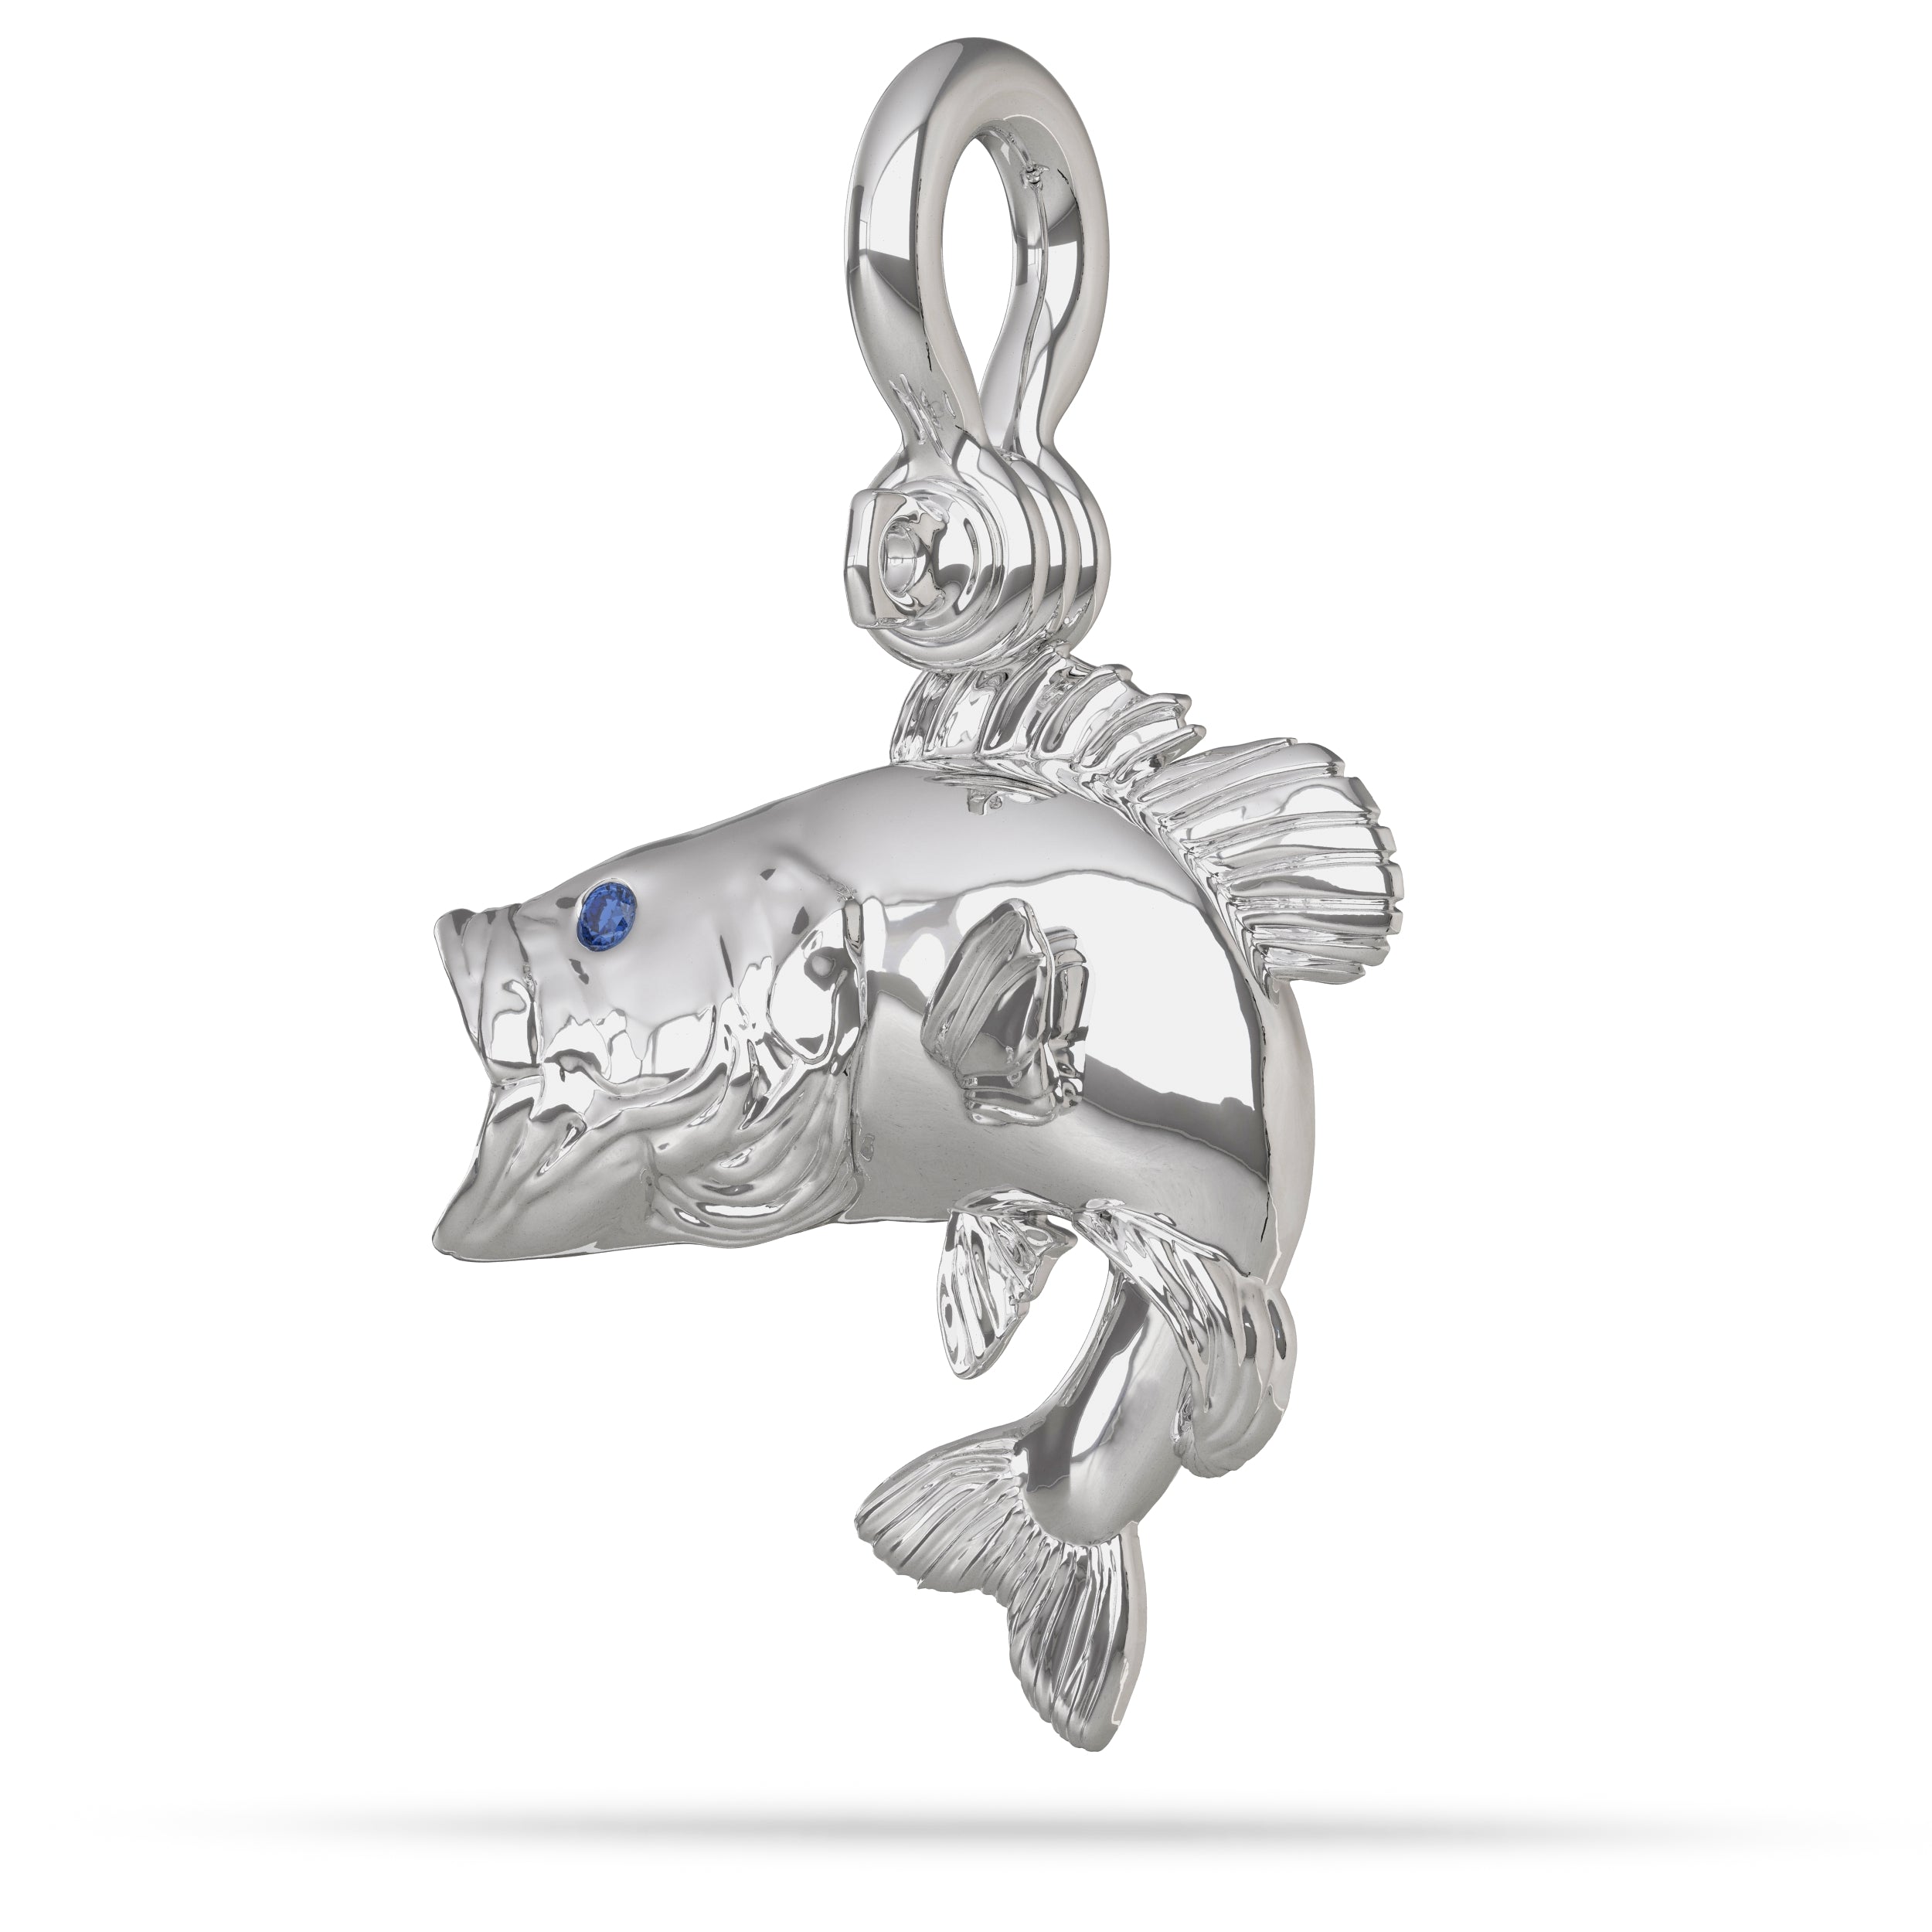 Bass Charm, Sterling Silver, Bass Fish Charm, Fish Jewelry -  Singapore